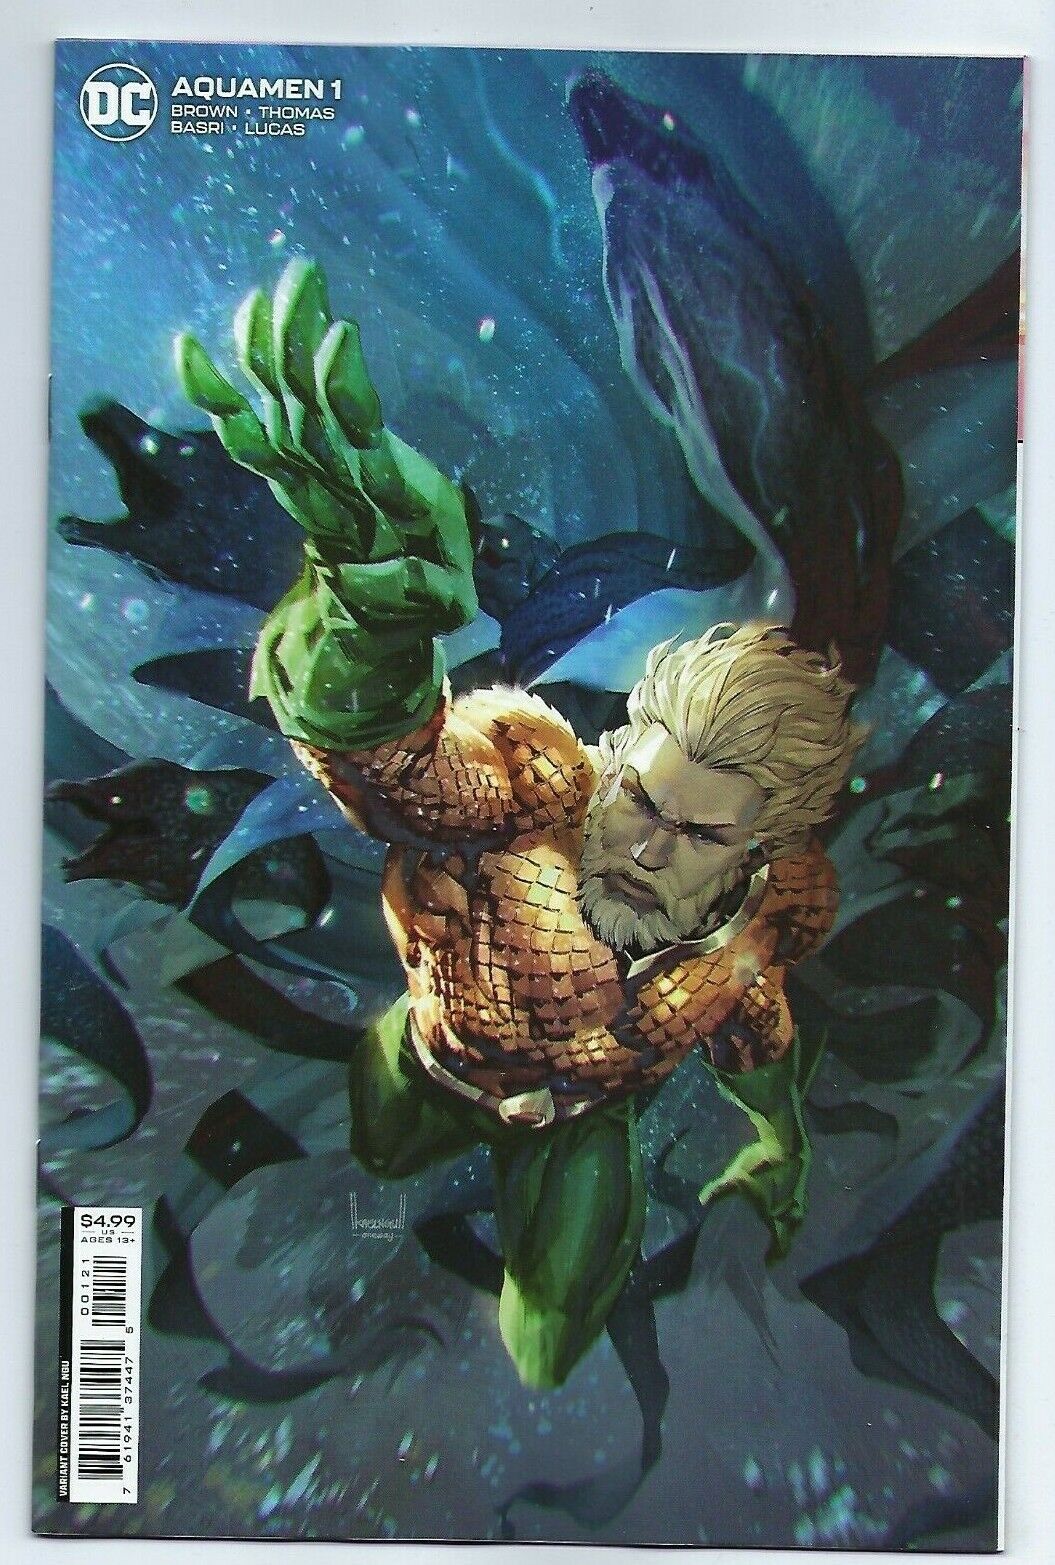 DC Comics AQUAMEN #1 first printing cover B